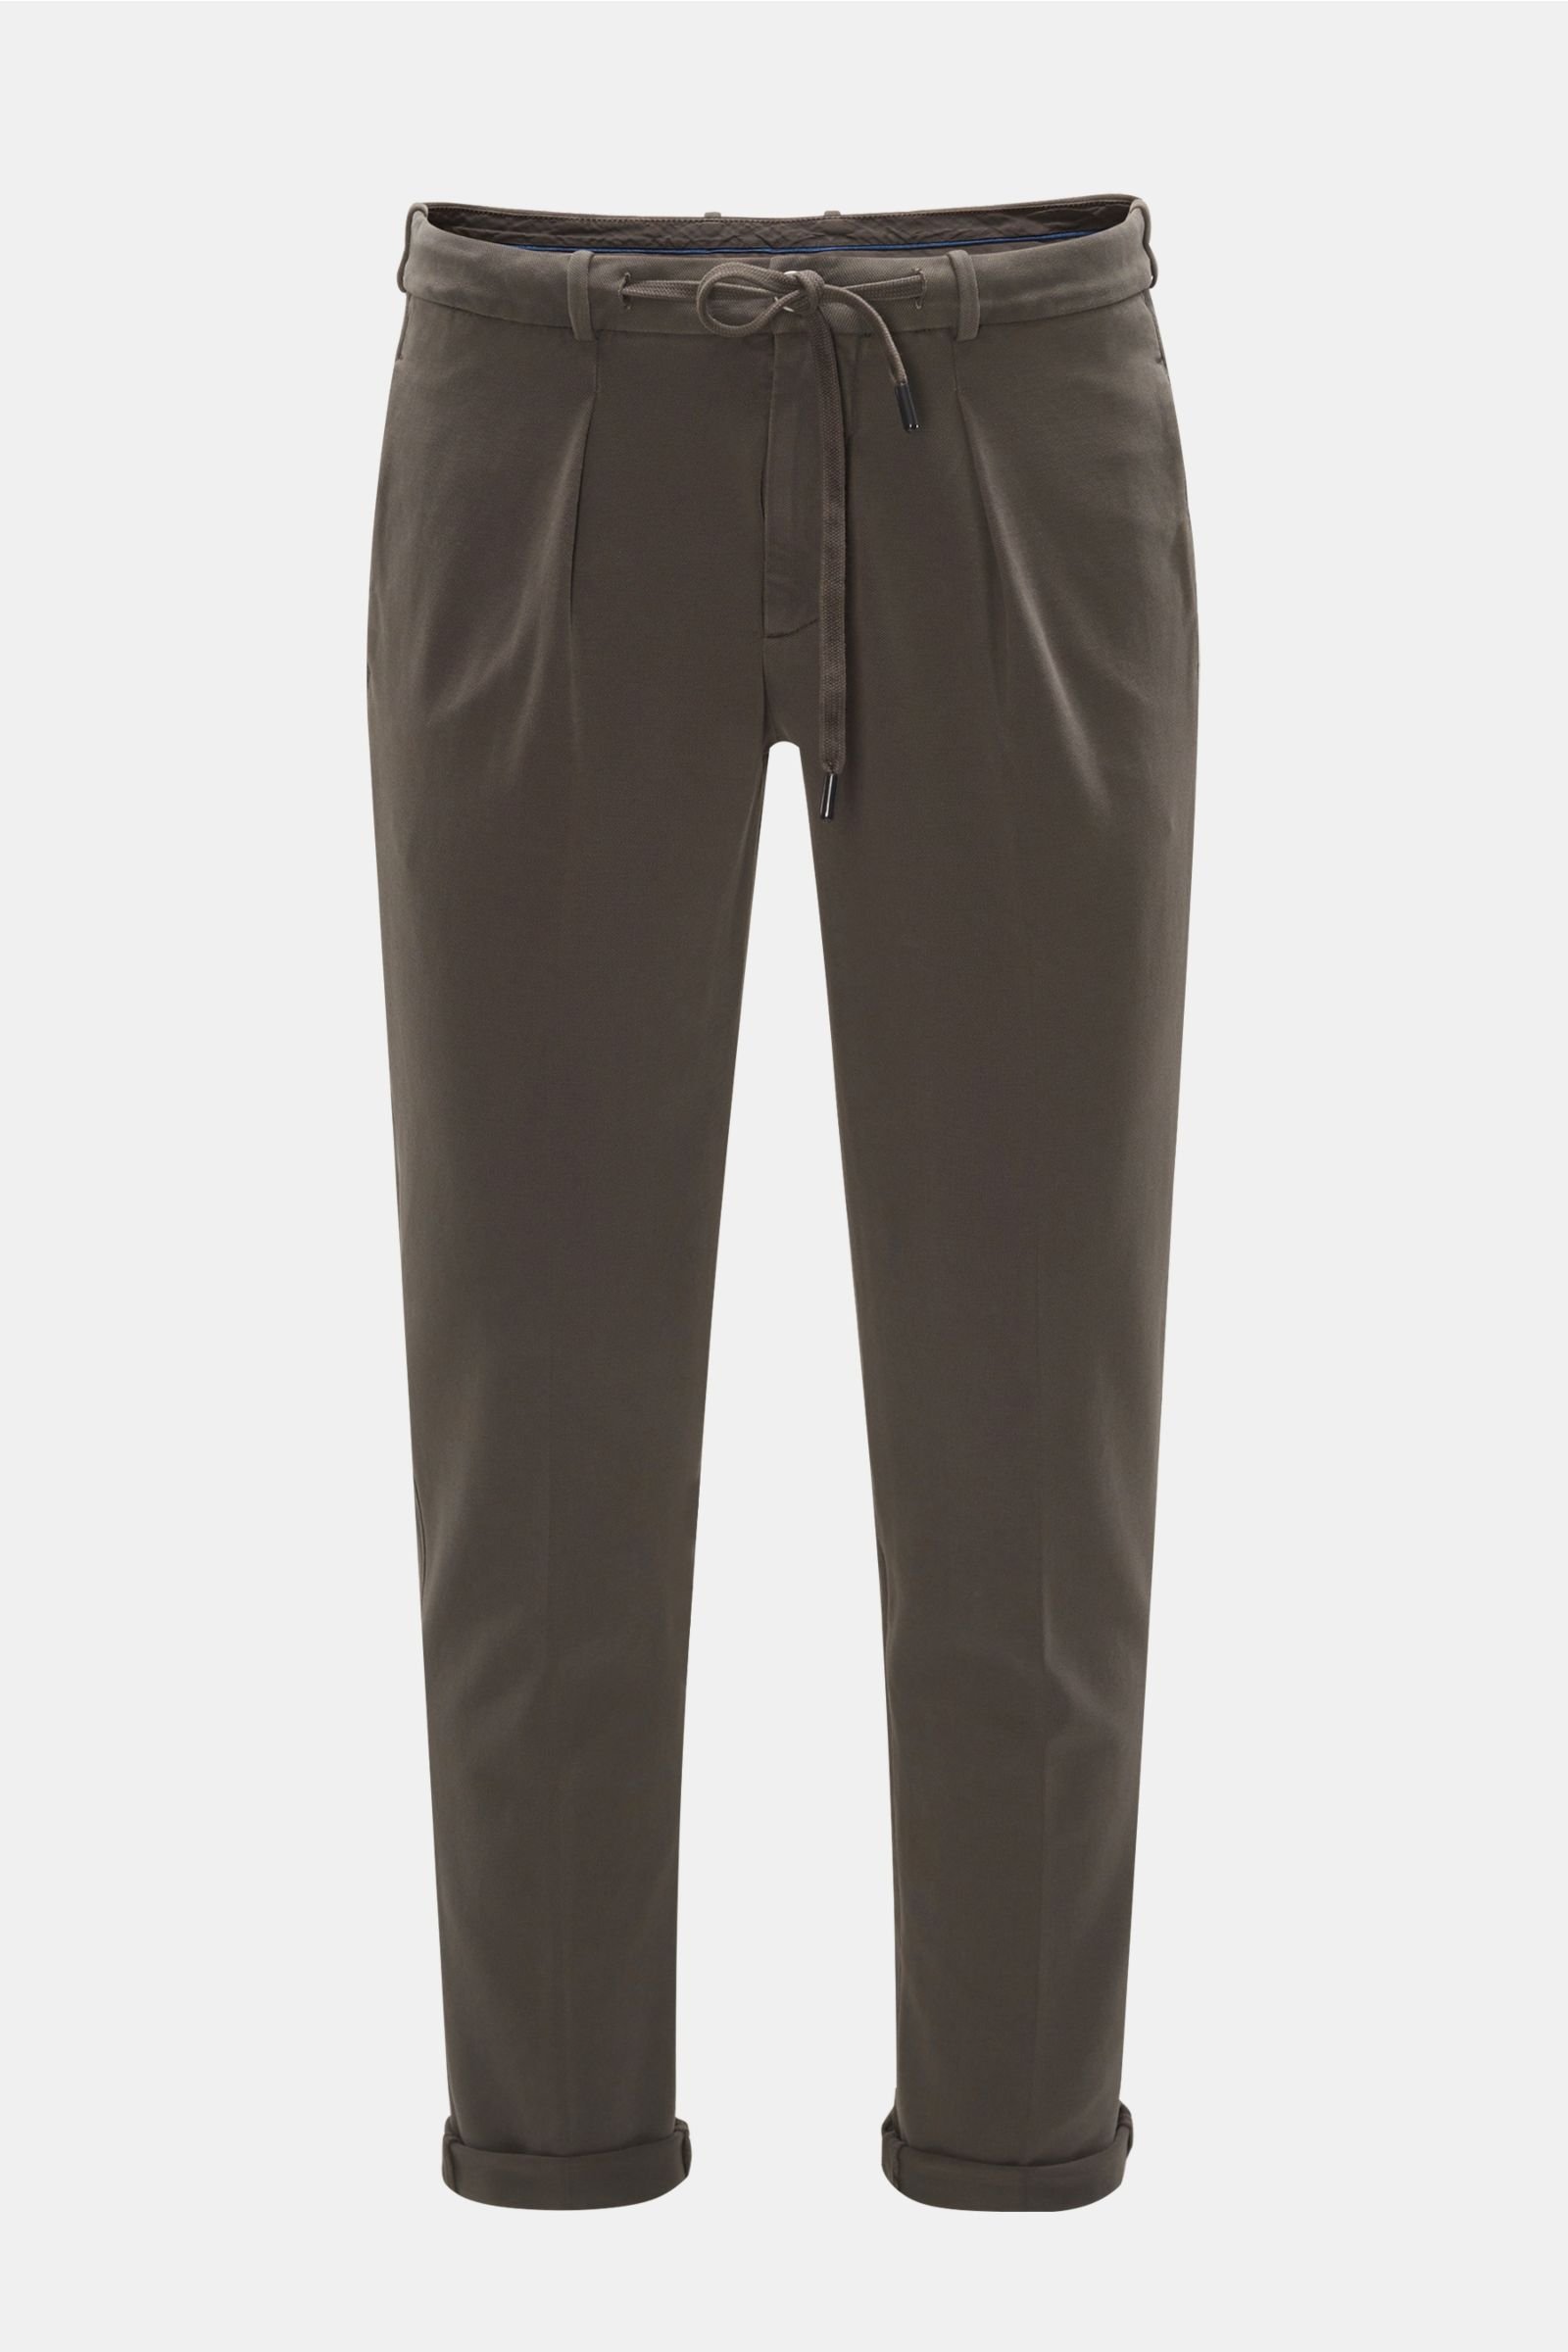 Jersey jogger pants grey-brown